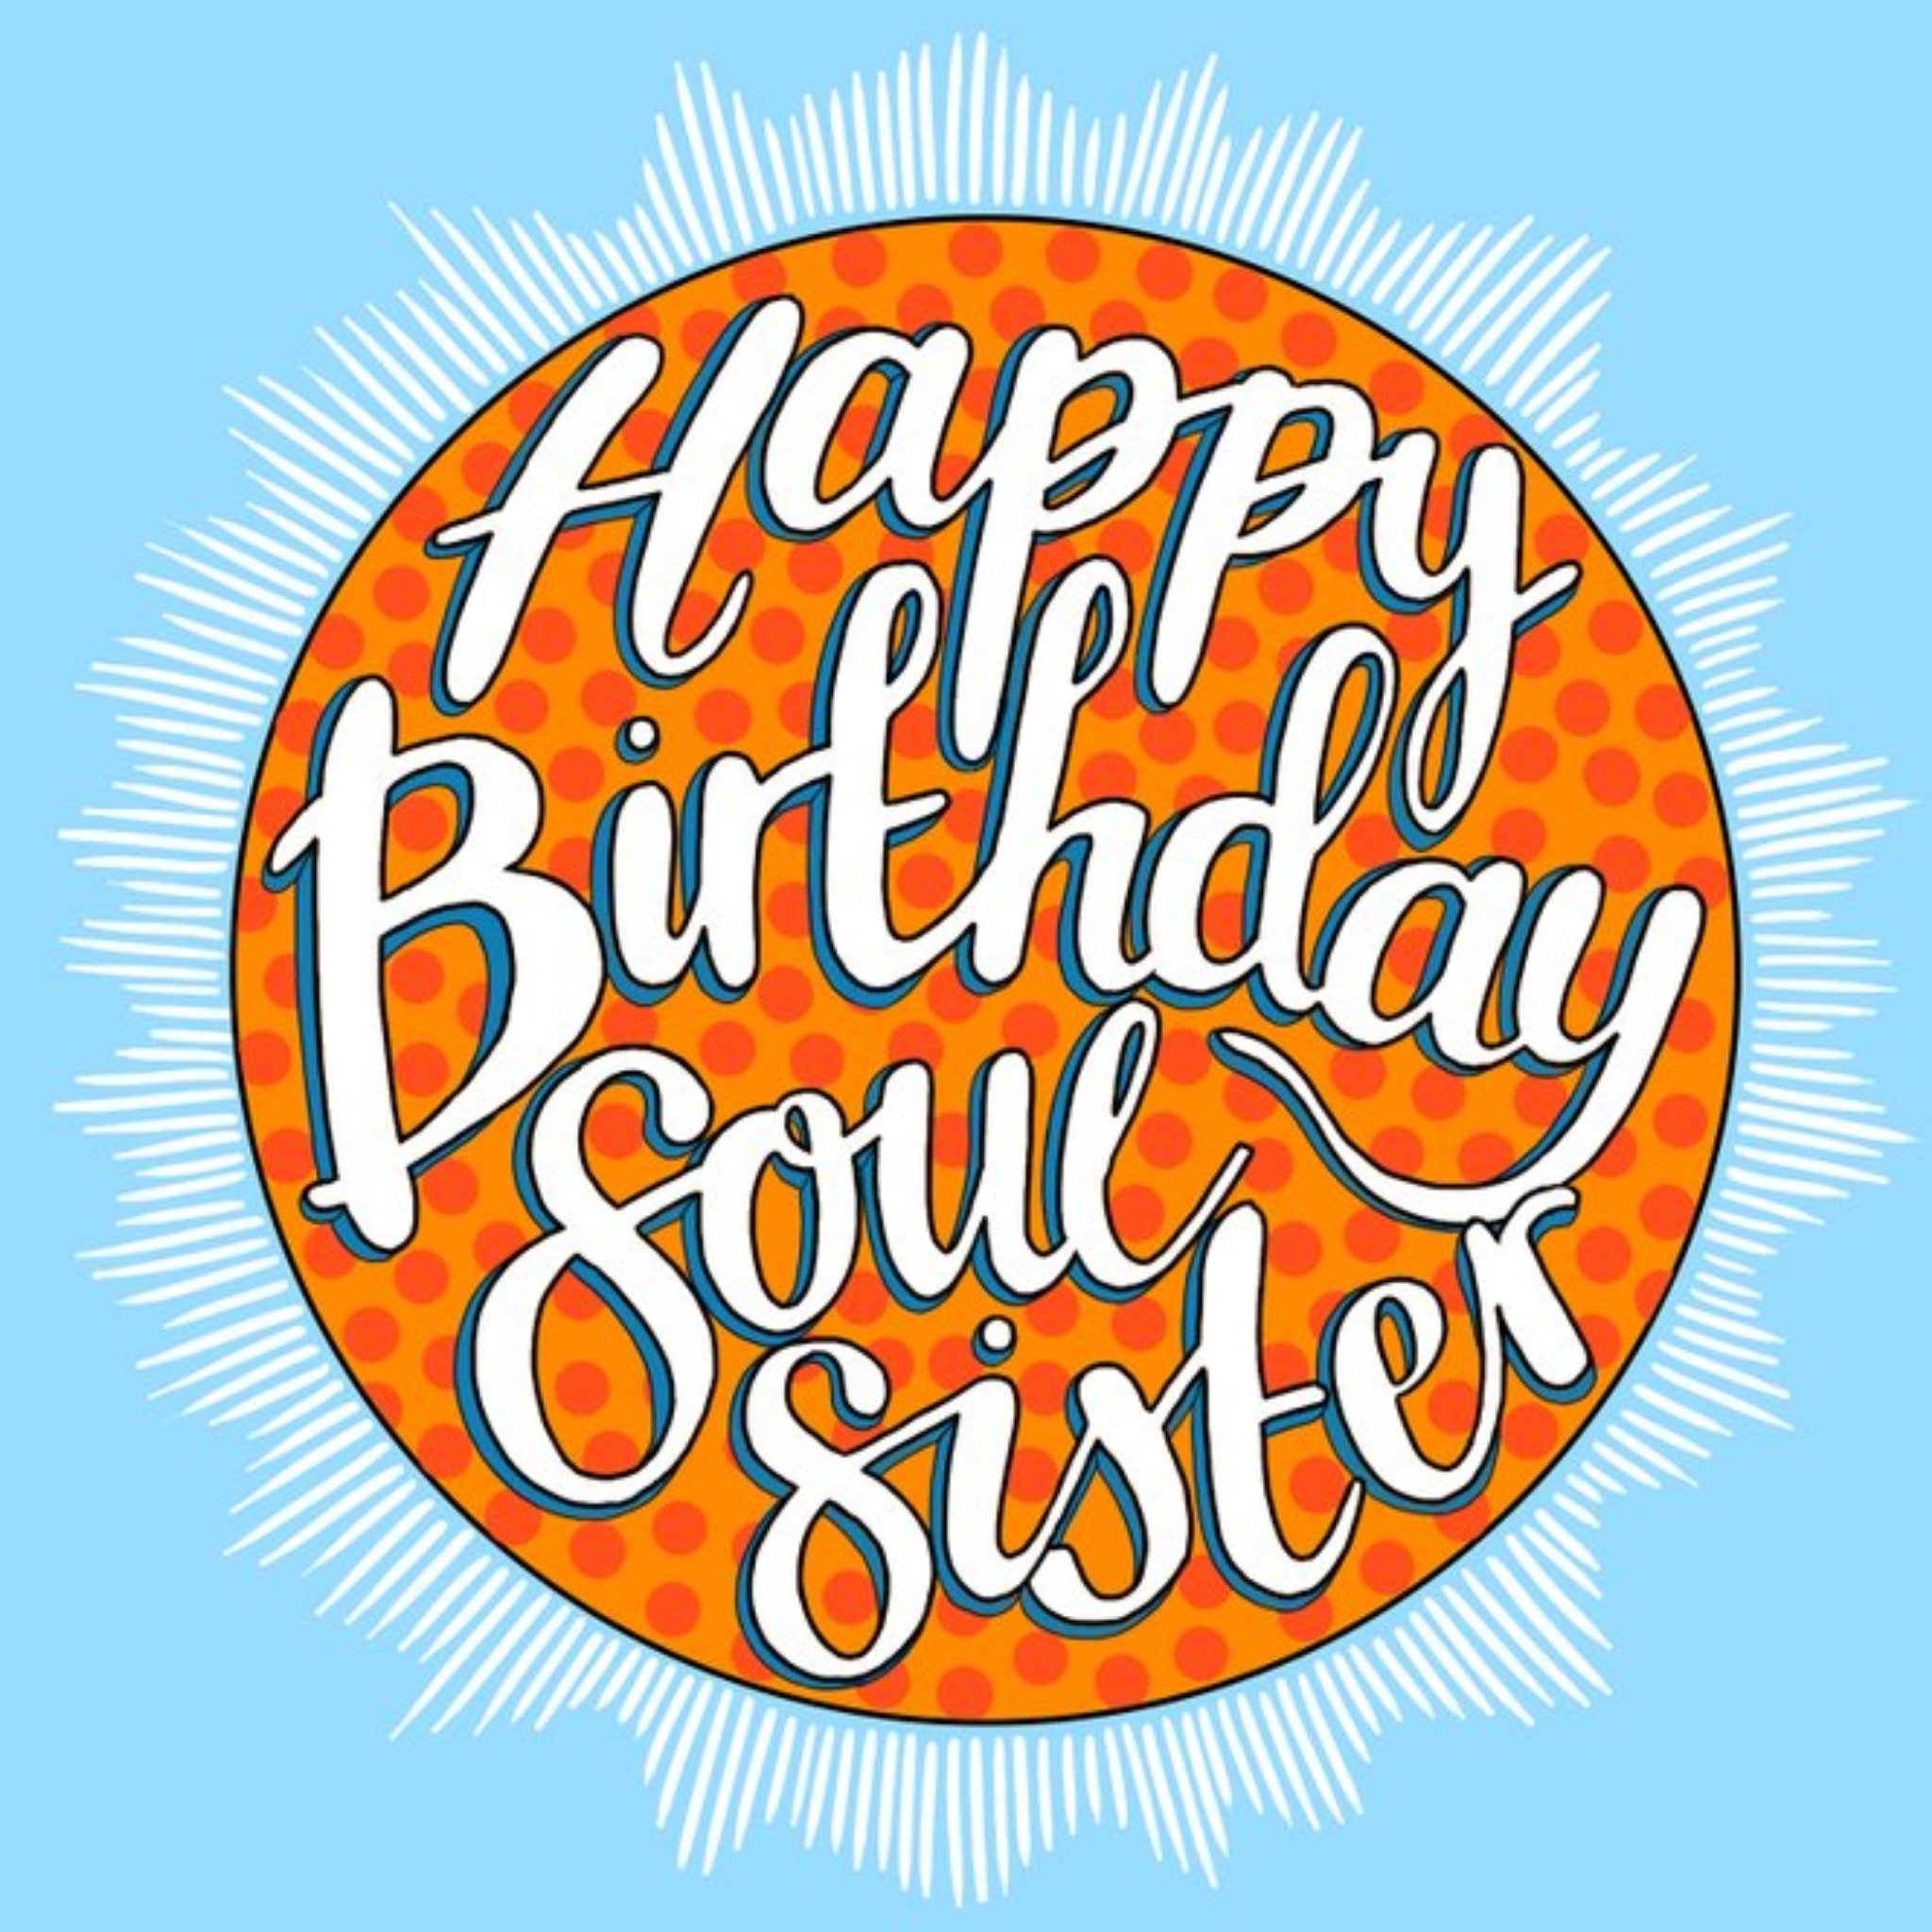 Moonpig Soul Sister Birthday Card, Large